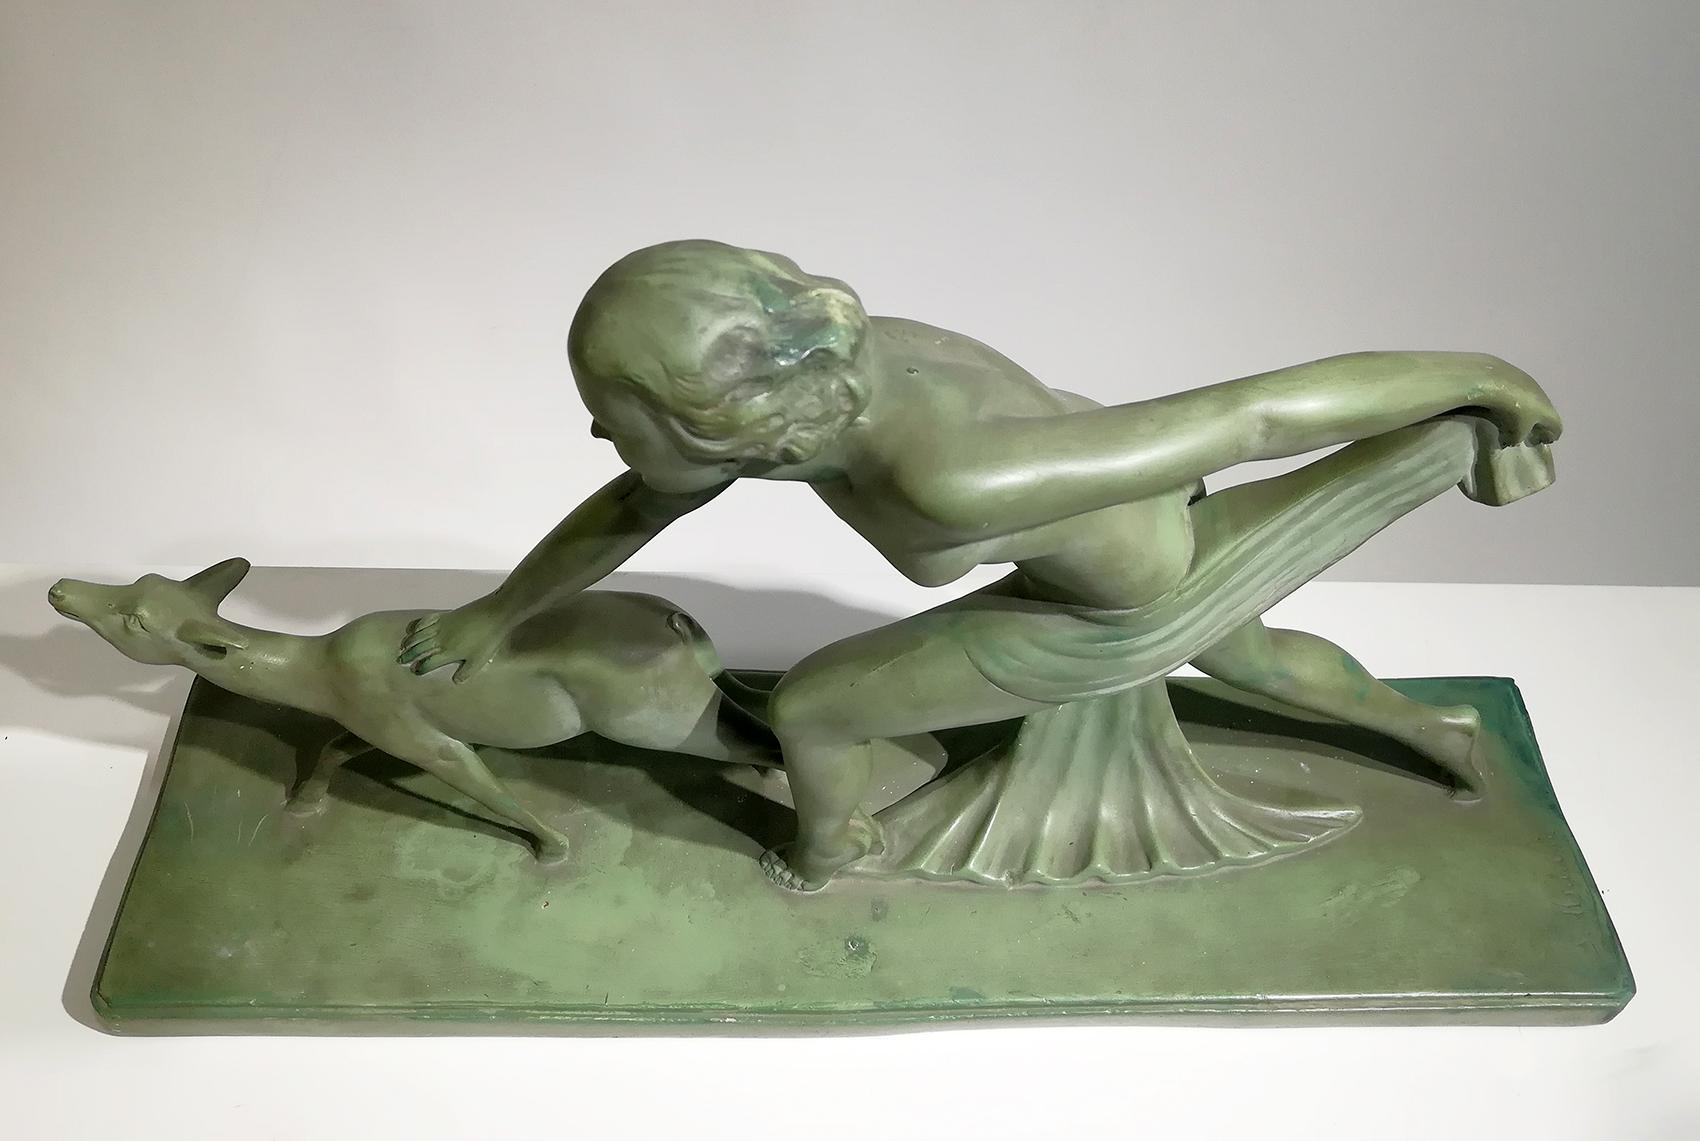 Beautiful Green Terracotta Sculpture Signed “S.Melanie”, circa 1920 For Sale 1